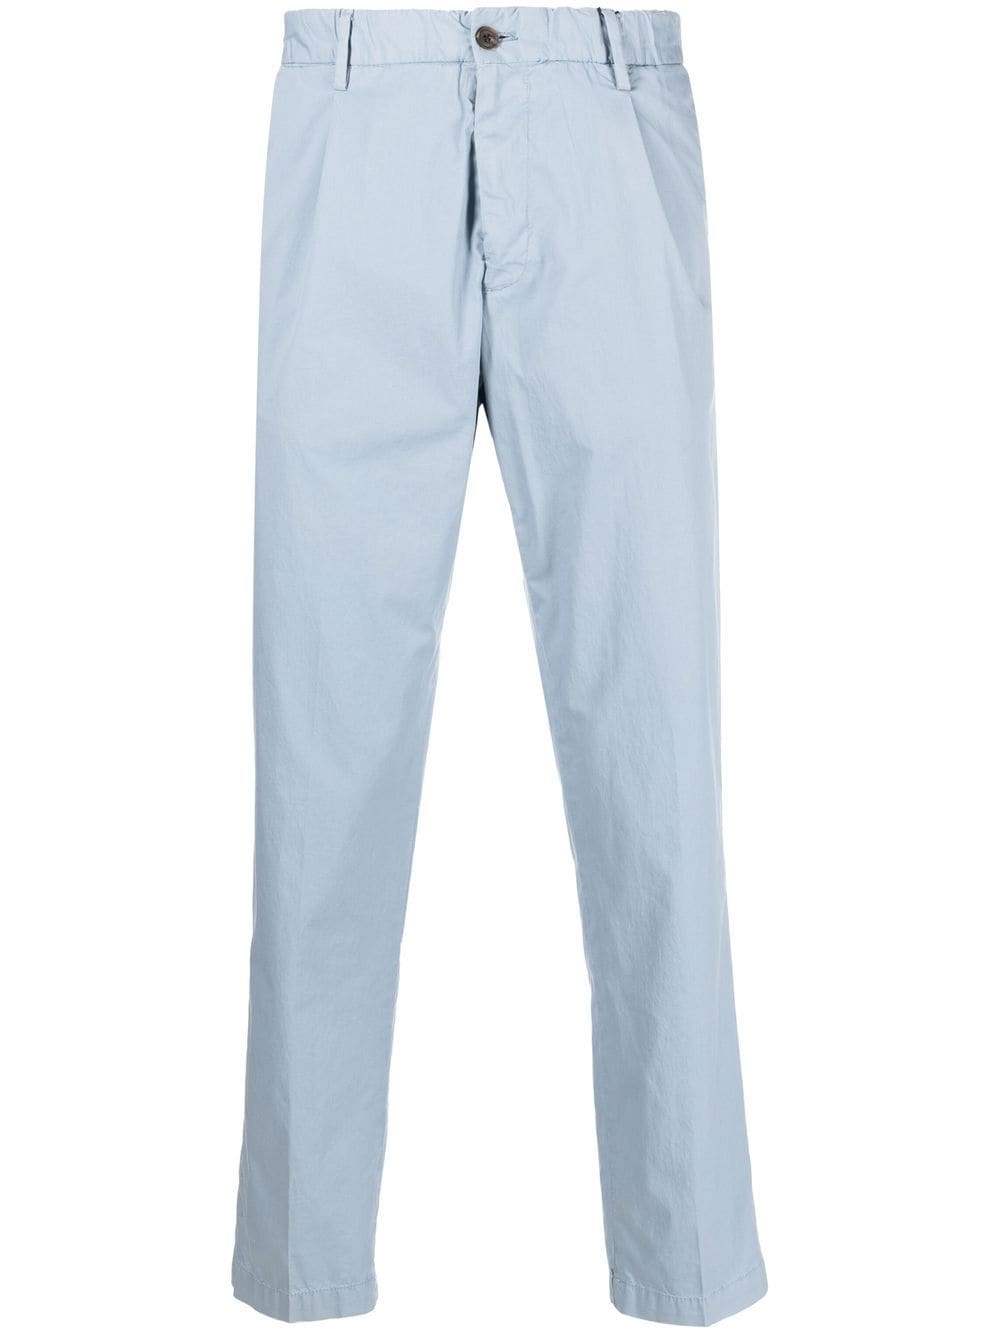 corneliani pantalon chino à taille élastiquée - bleu